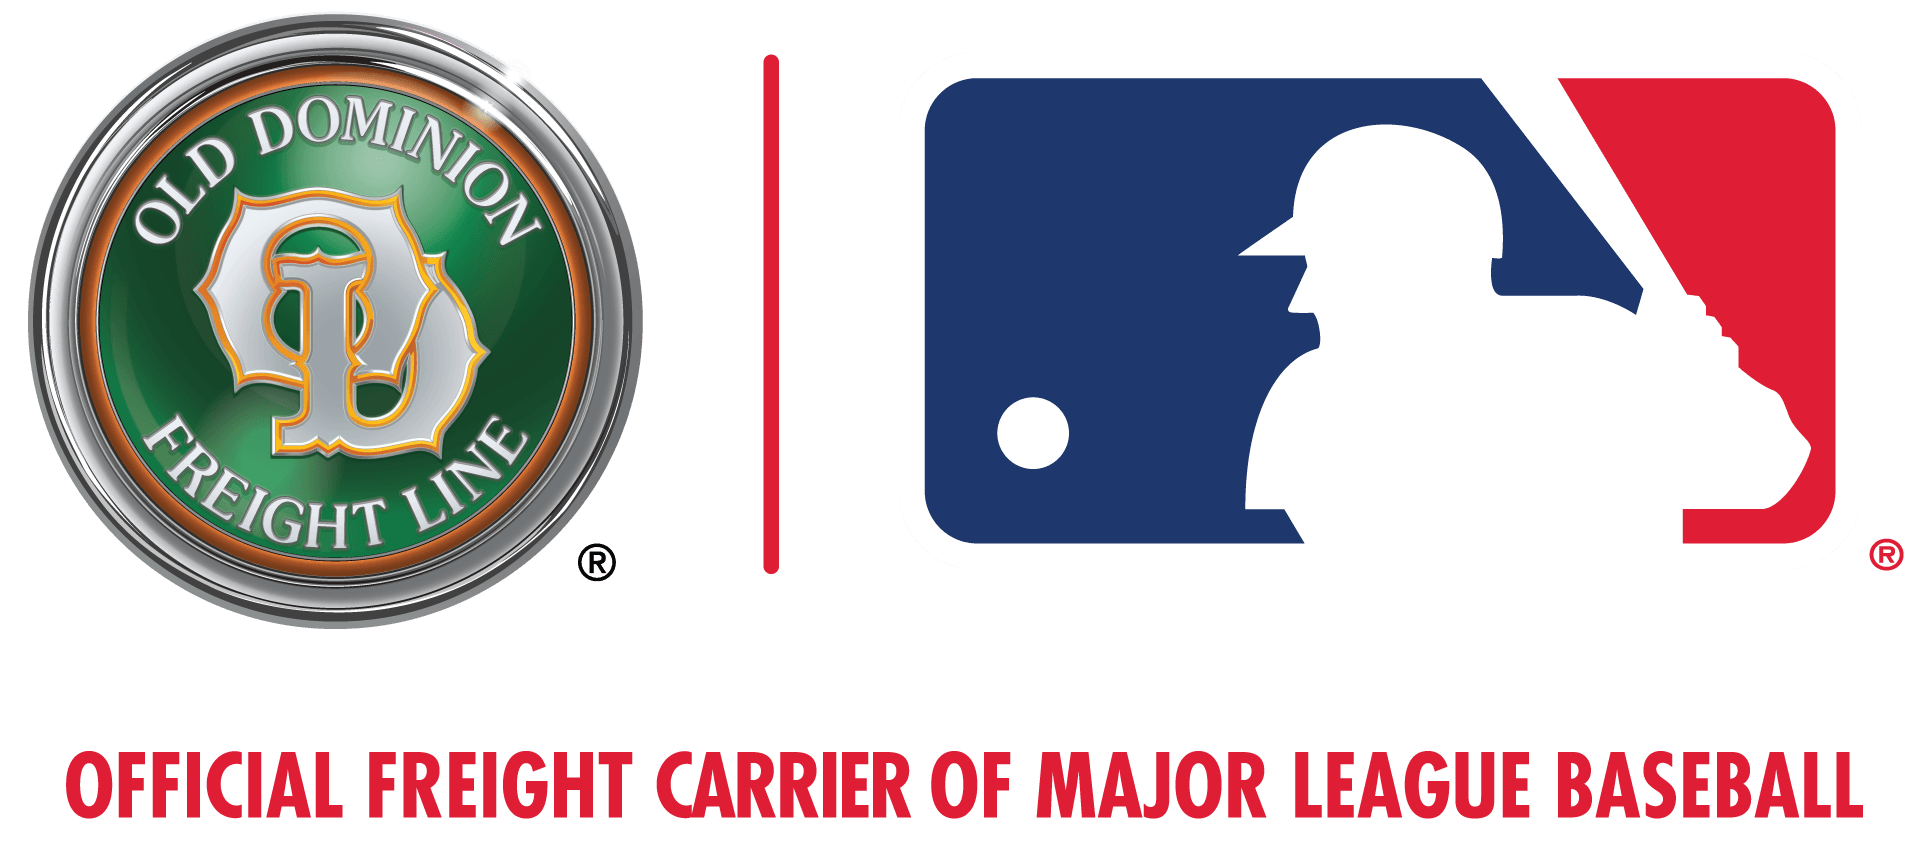 Old Dominion Freight Line Logo - Major League Baseball